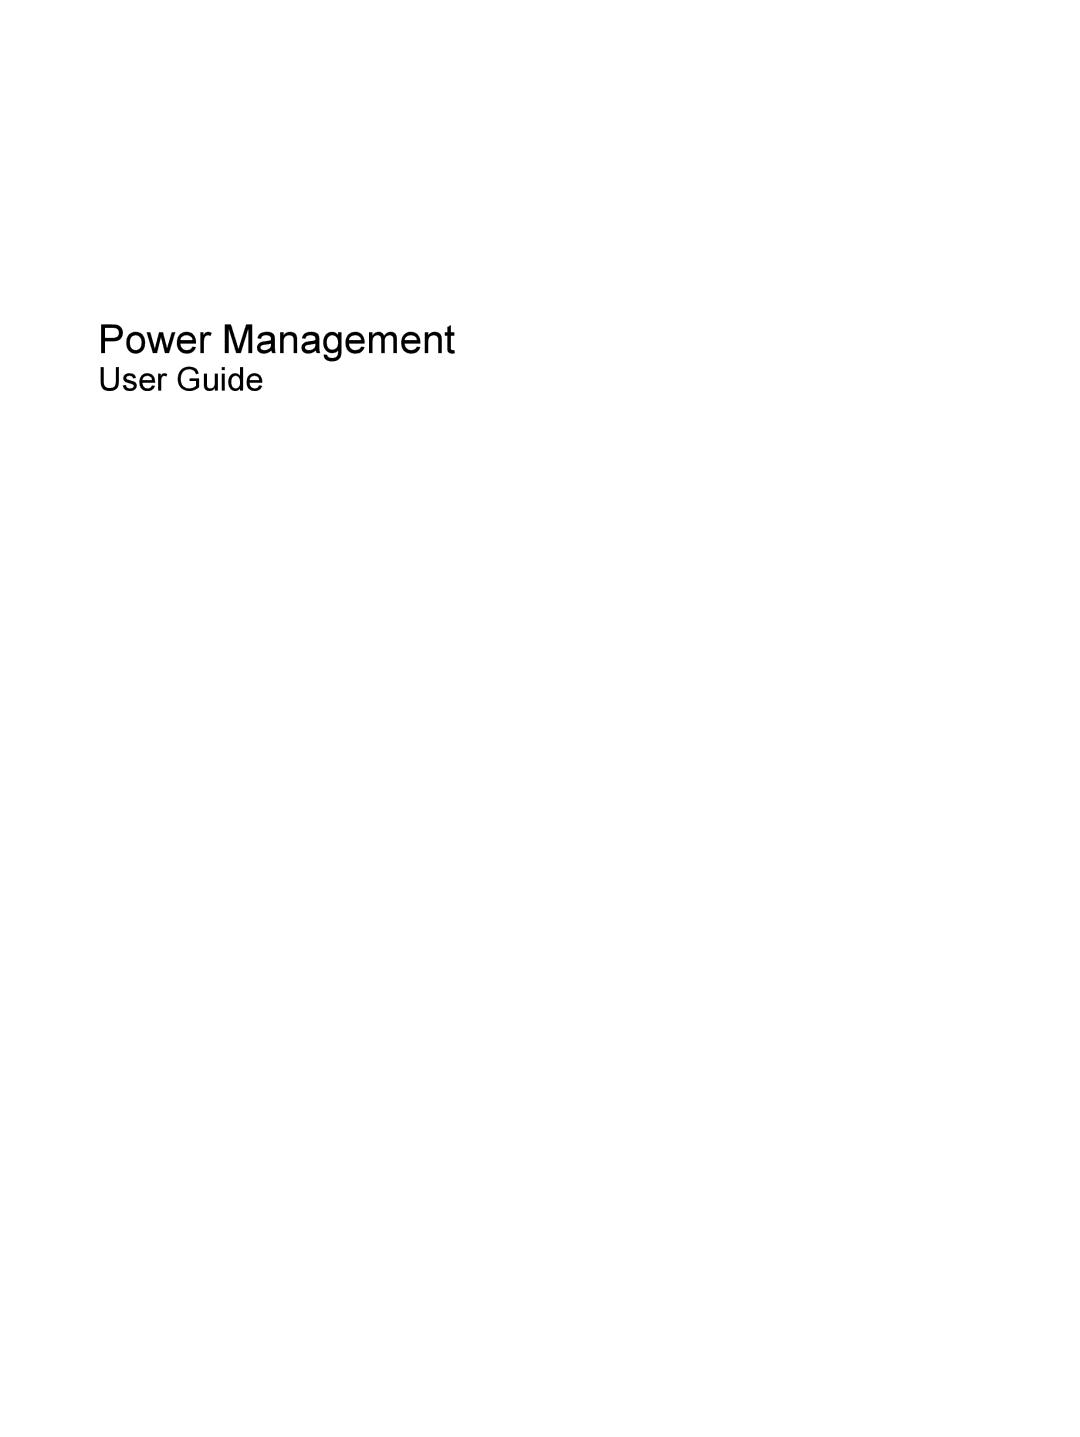 HP Power Management manual 